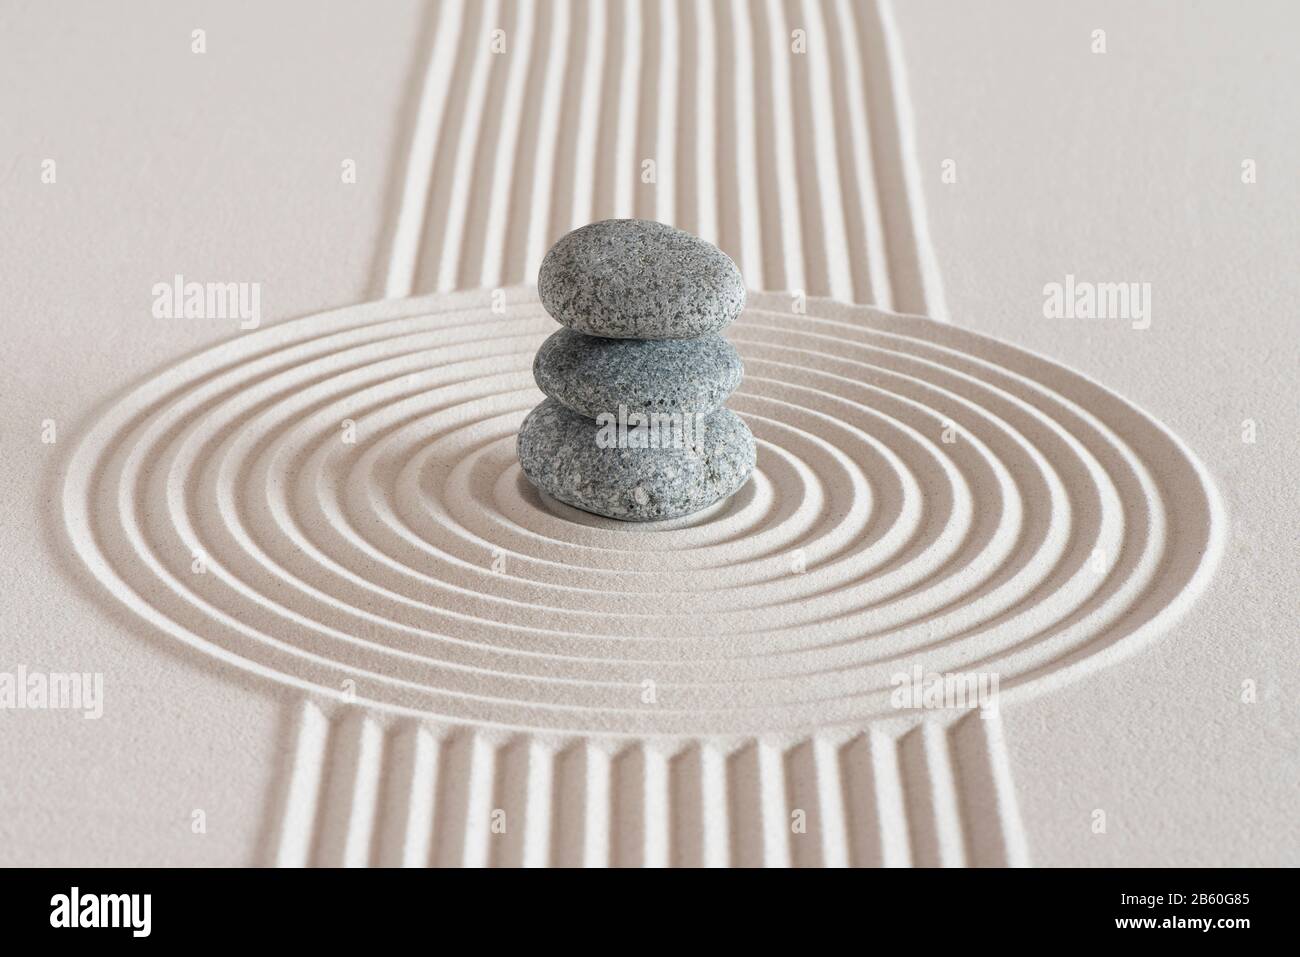 Japanese zen garden with stone in textured white sand Stock Photo